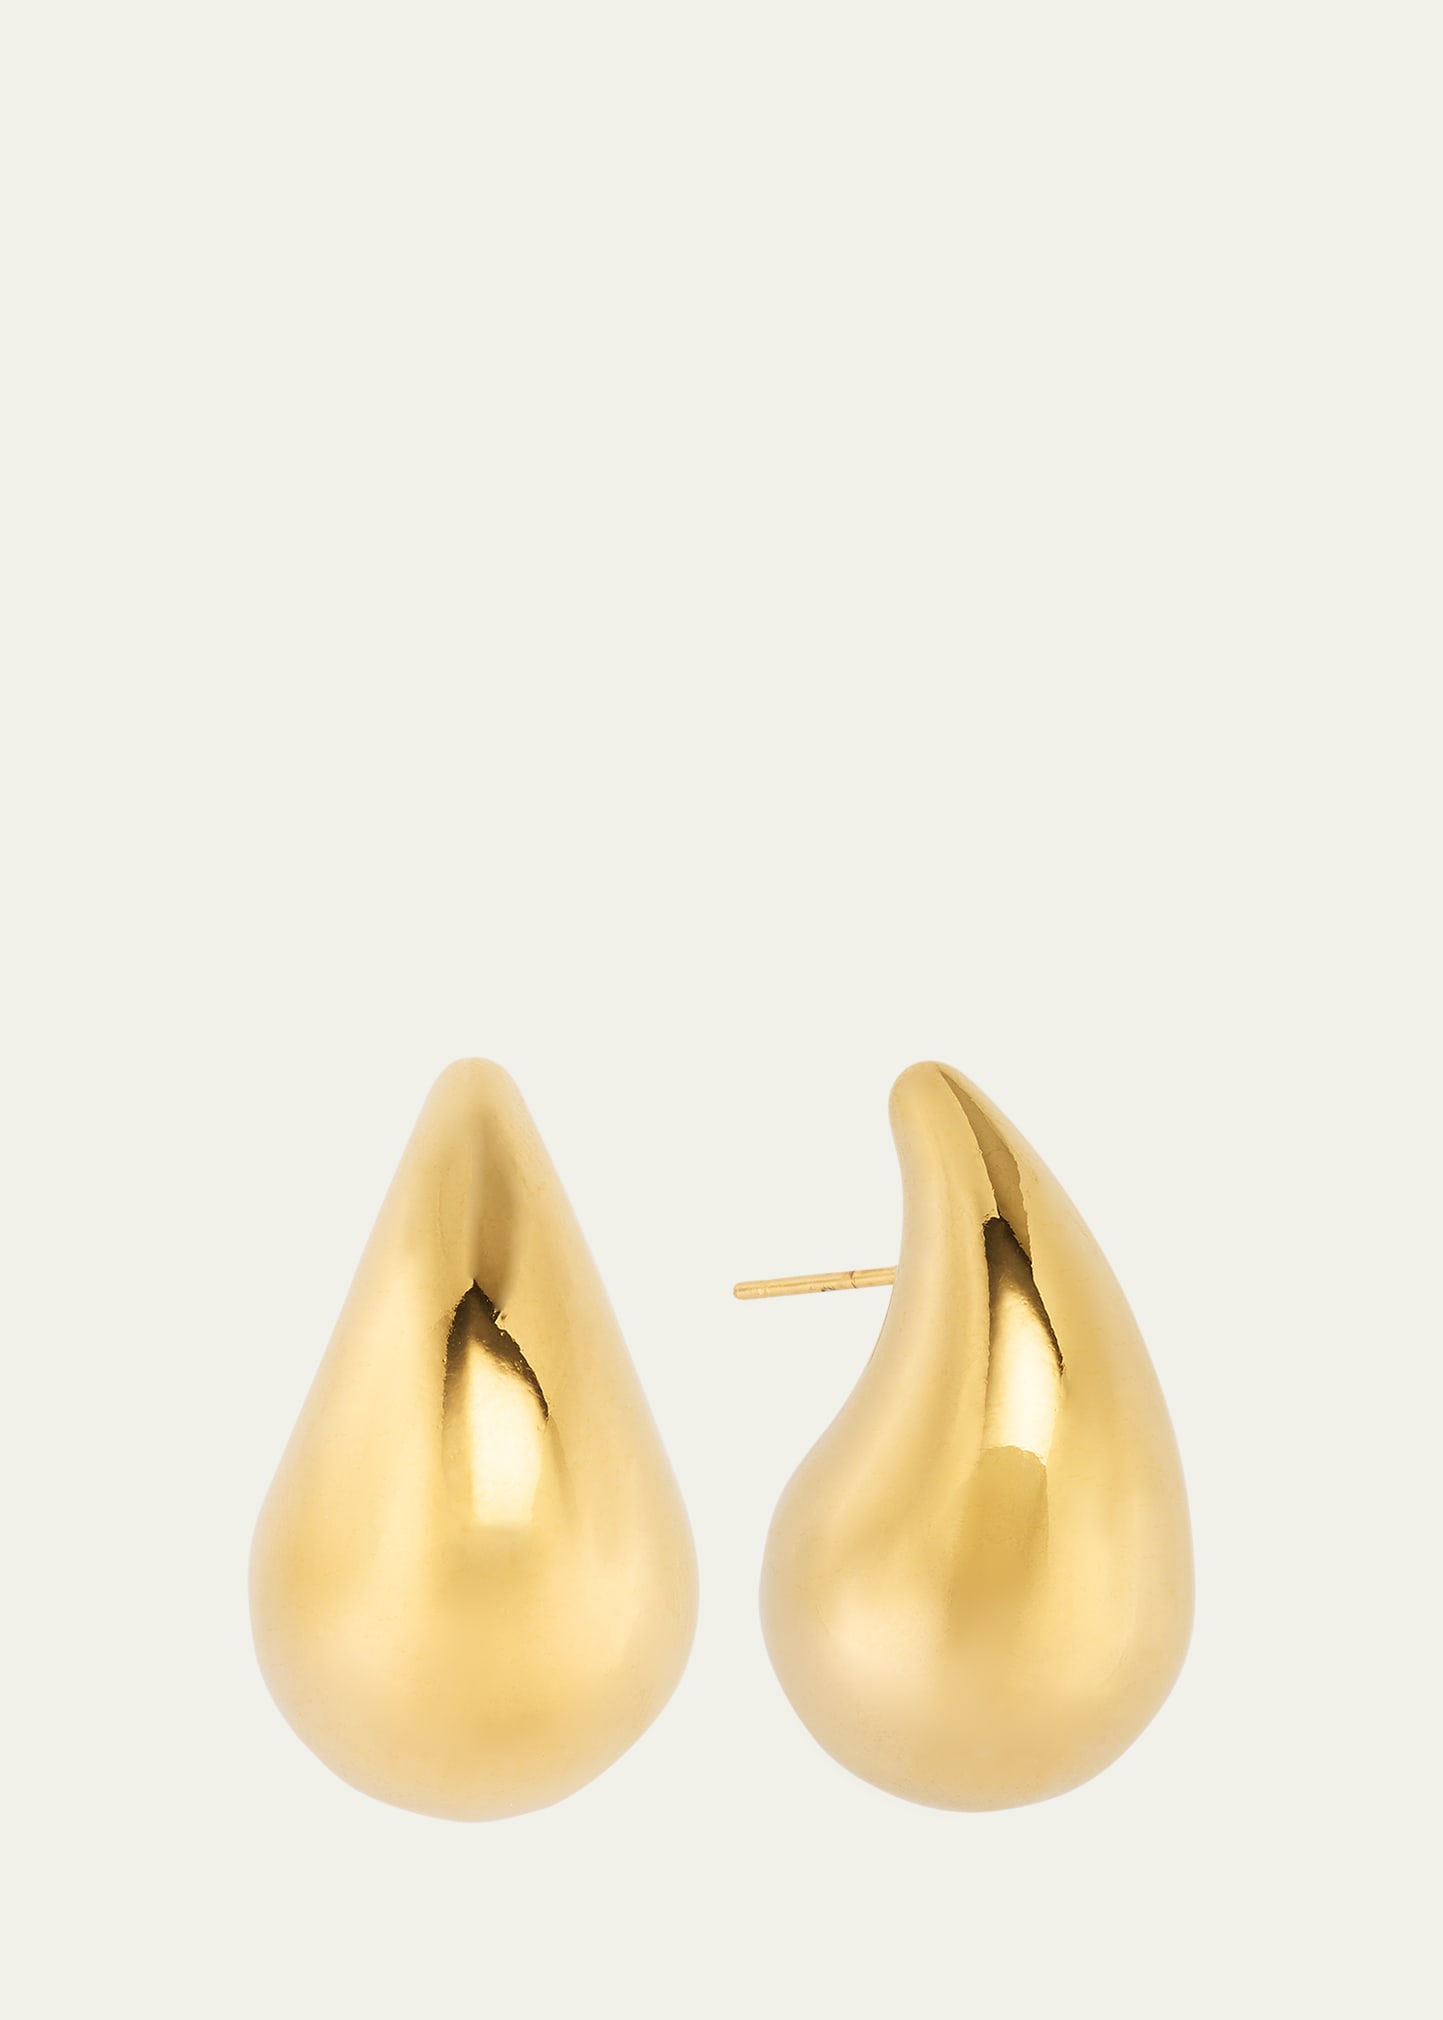 Ben-amun Gold Olar Teardrop Earrings